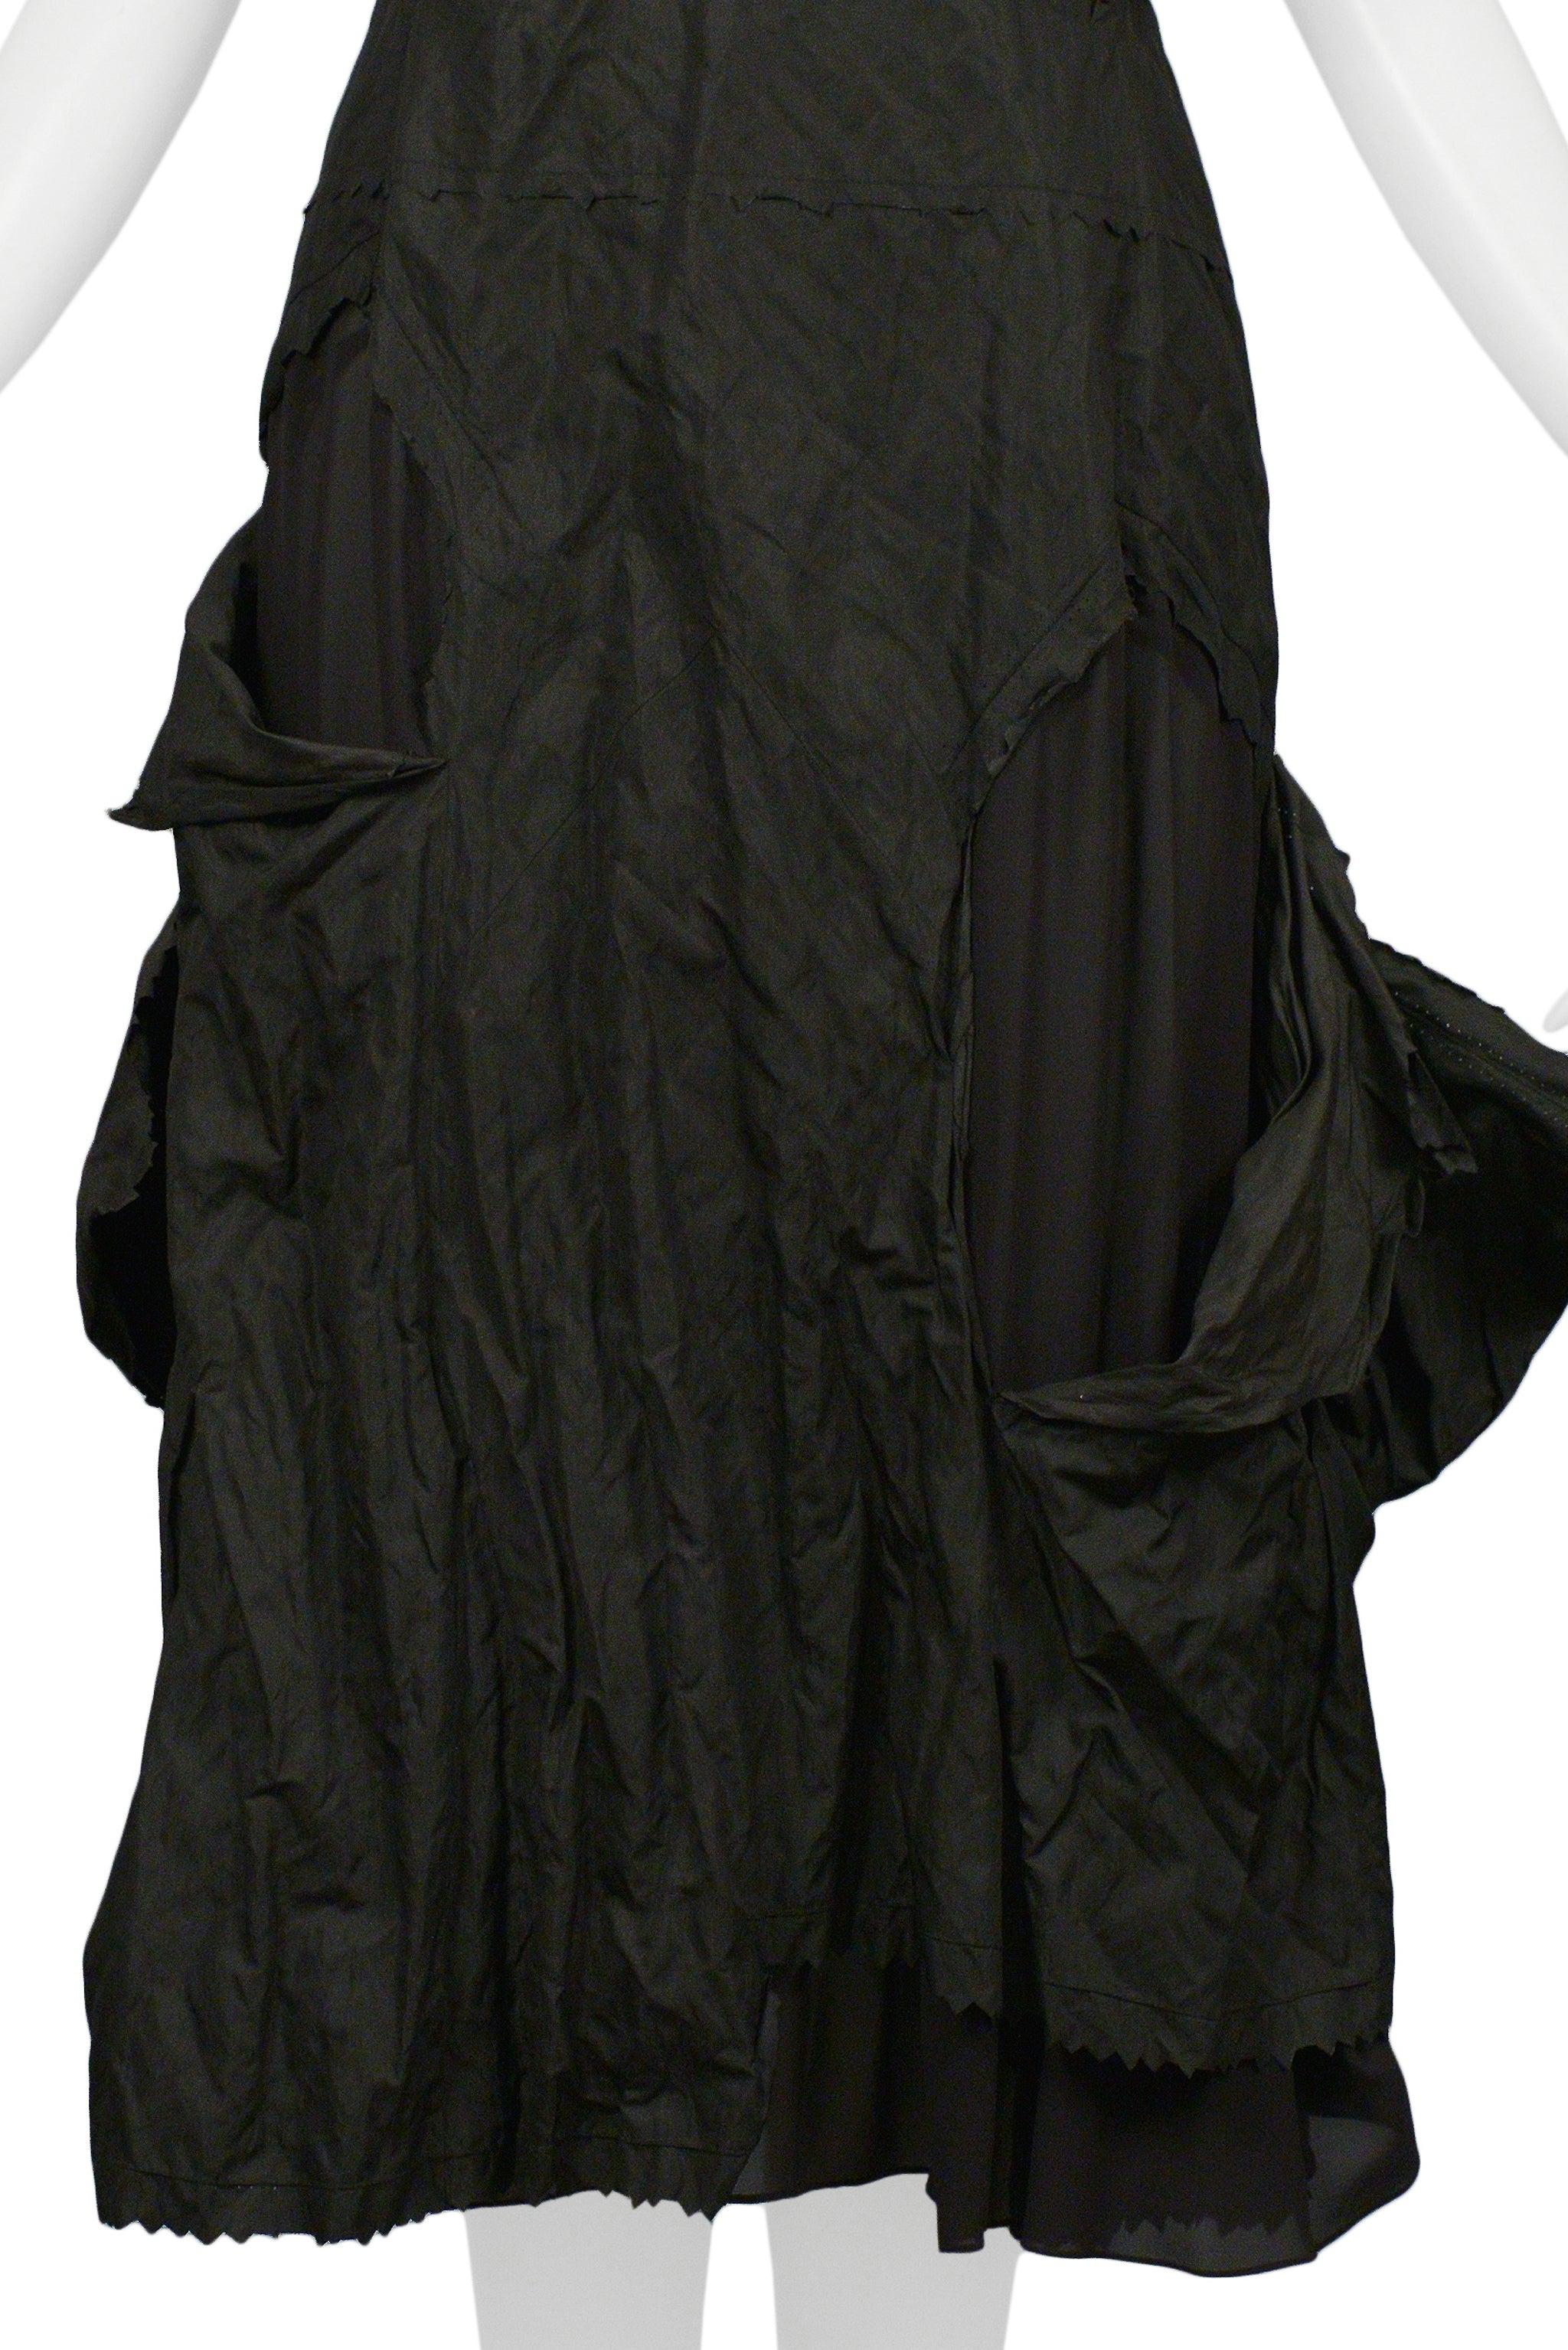 Christian Dior By John Galliano - Robe de soirée « Hobo » en taffetas noir  Excellent état - En vente à Los Angeles, CA